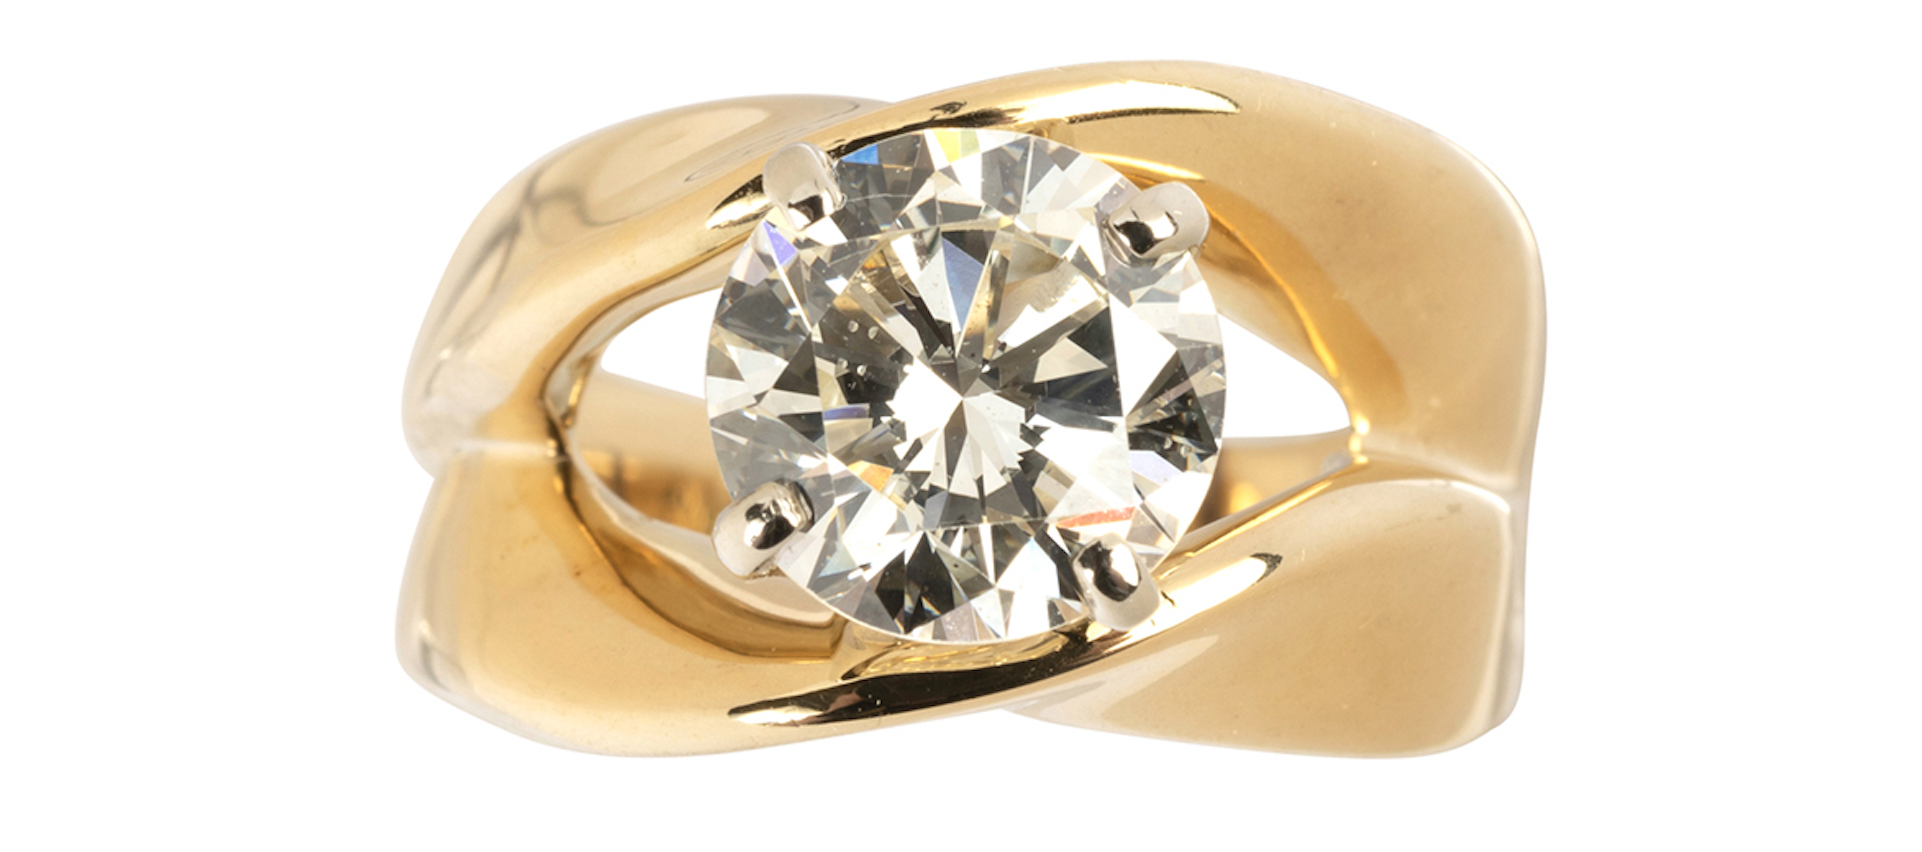 14K gold ring with 2.25-carat diamond, $9,840